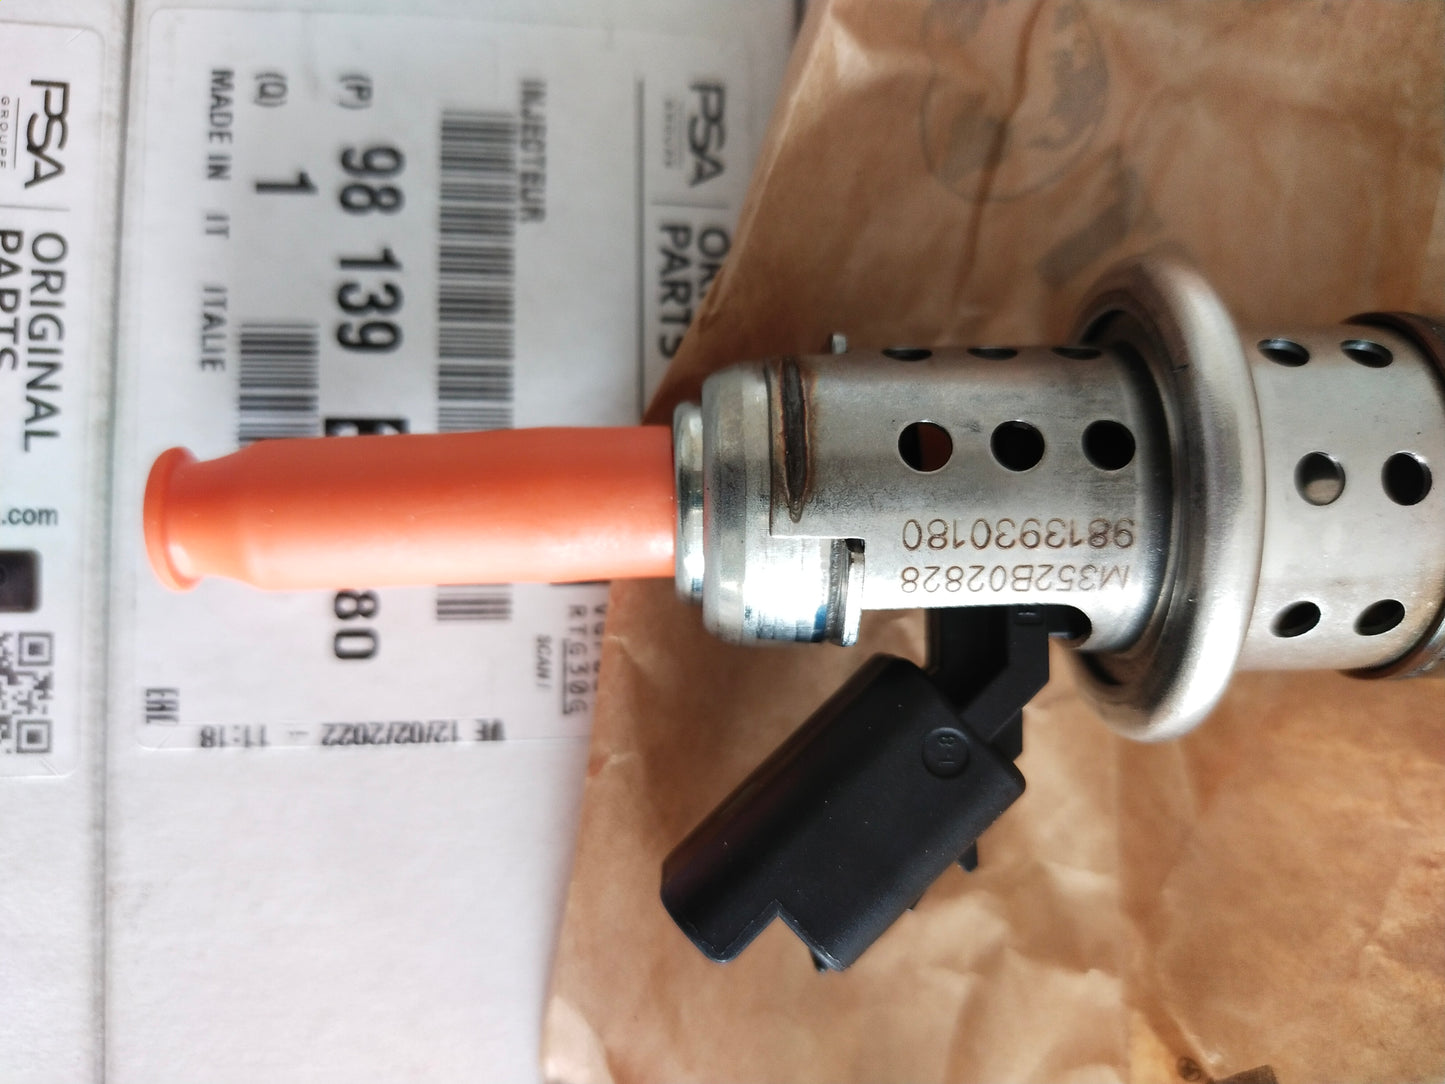 Injecteur Adblue PEUGEOT CITROEN 1.5 HDI  réf 9813930180